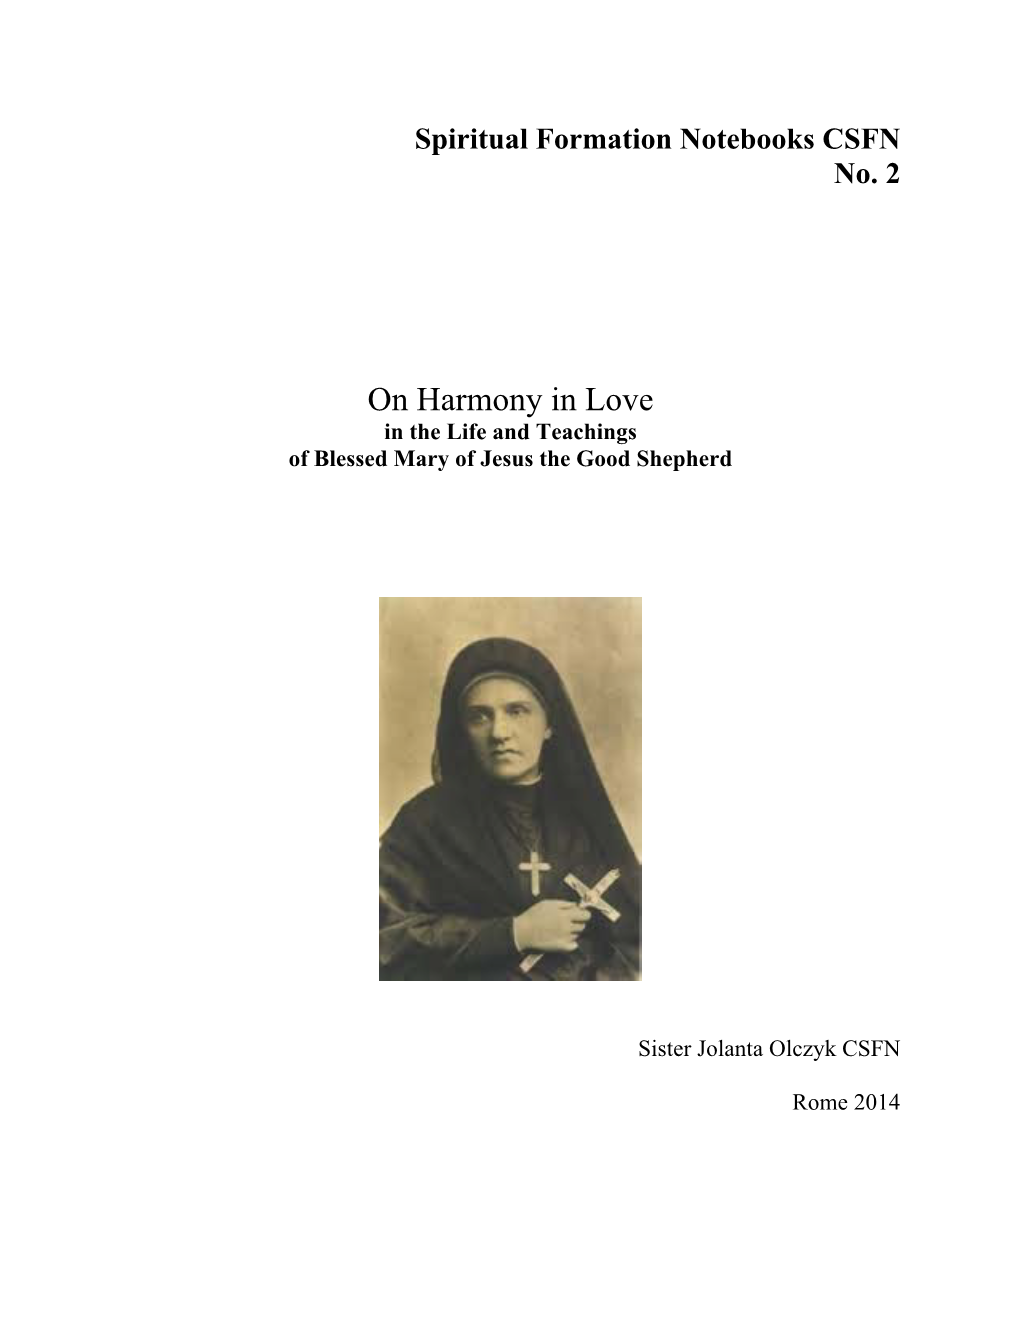 On Harmony in Love – Spiritual Notebook #2